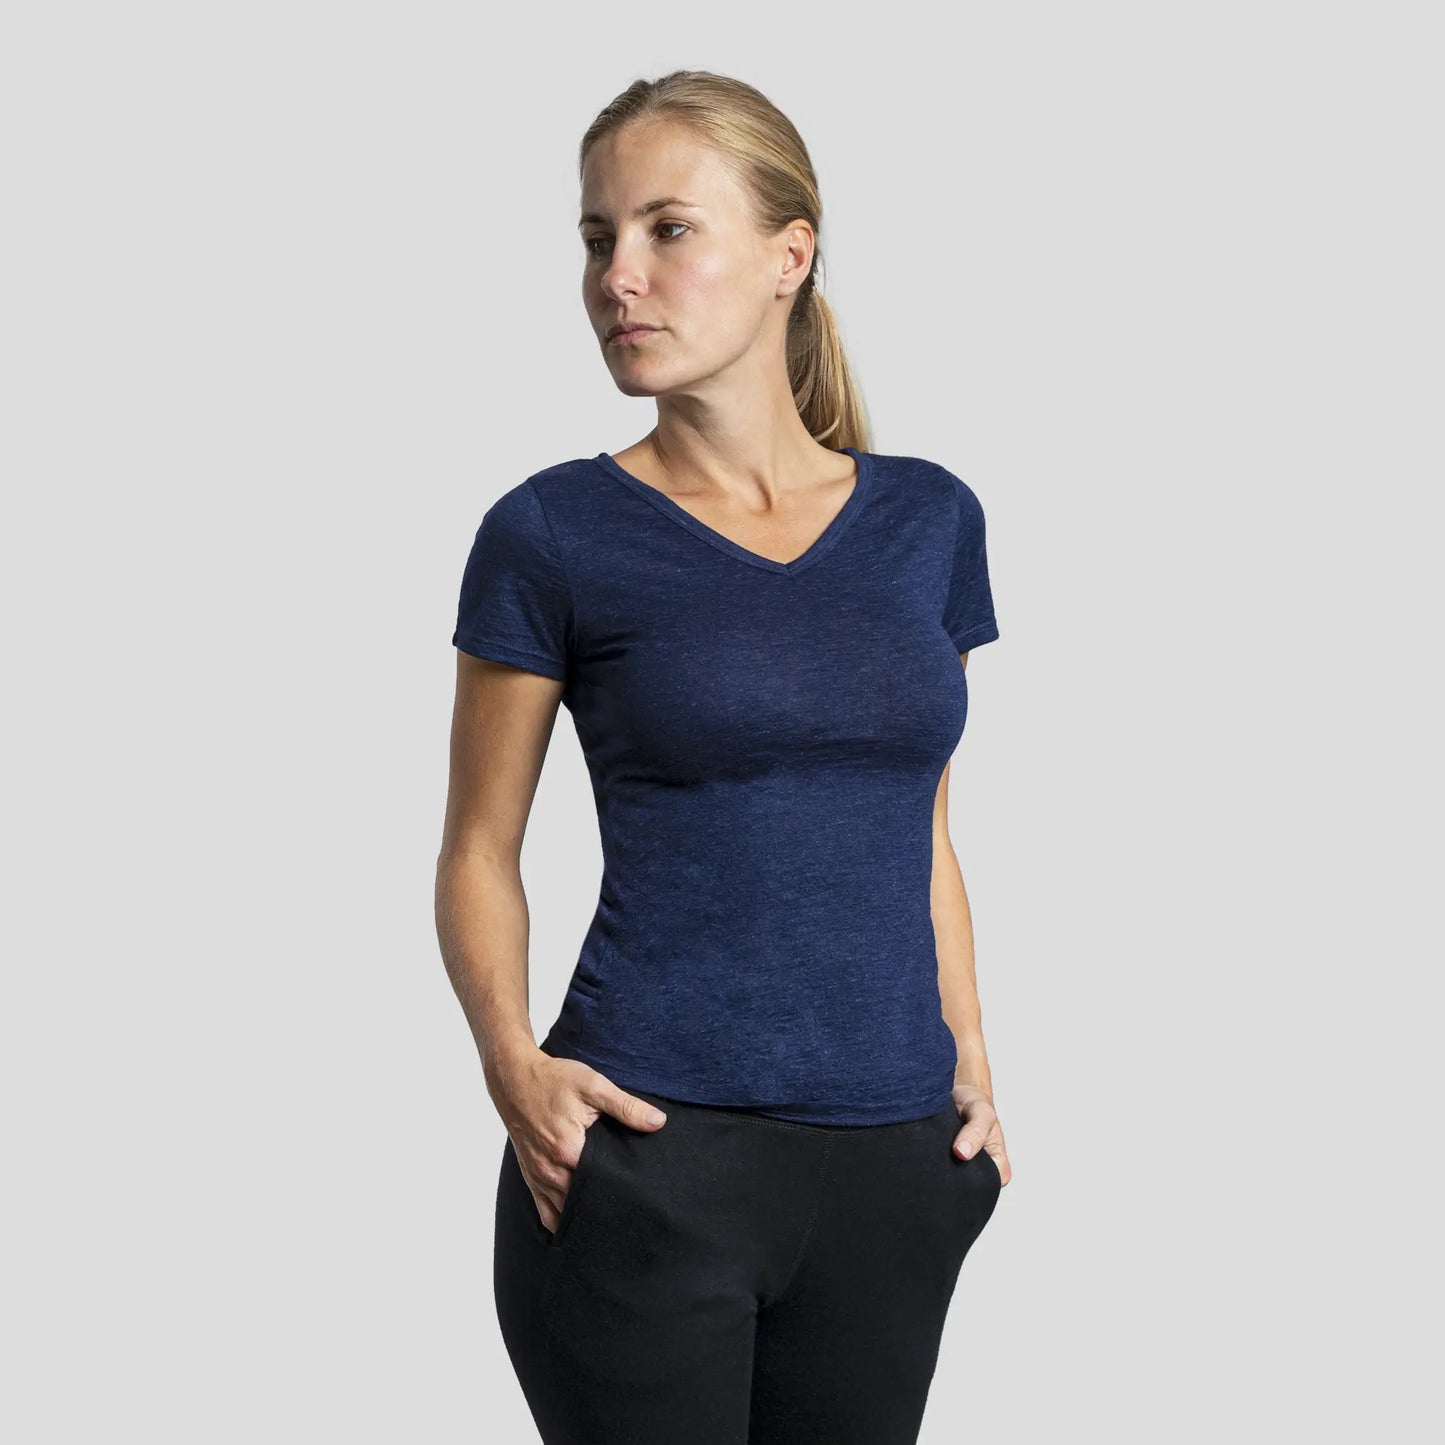 womens most confortable vneck tshirt color navy blue